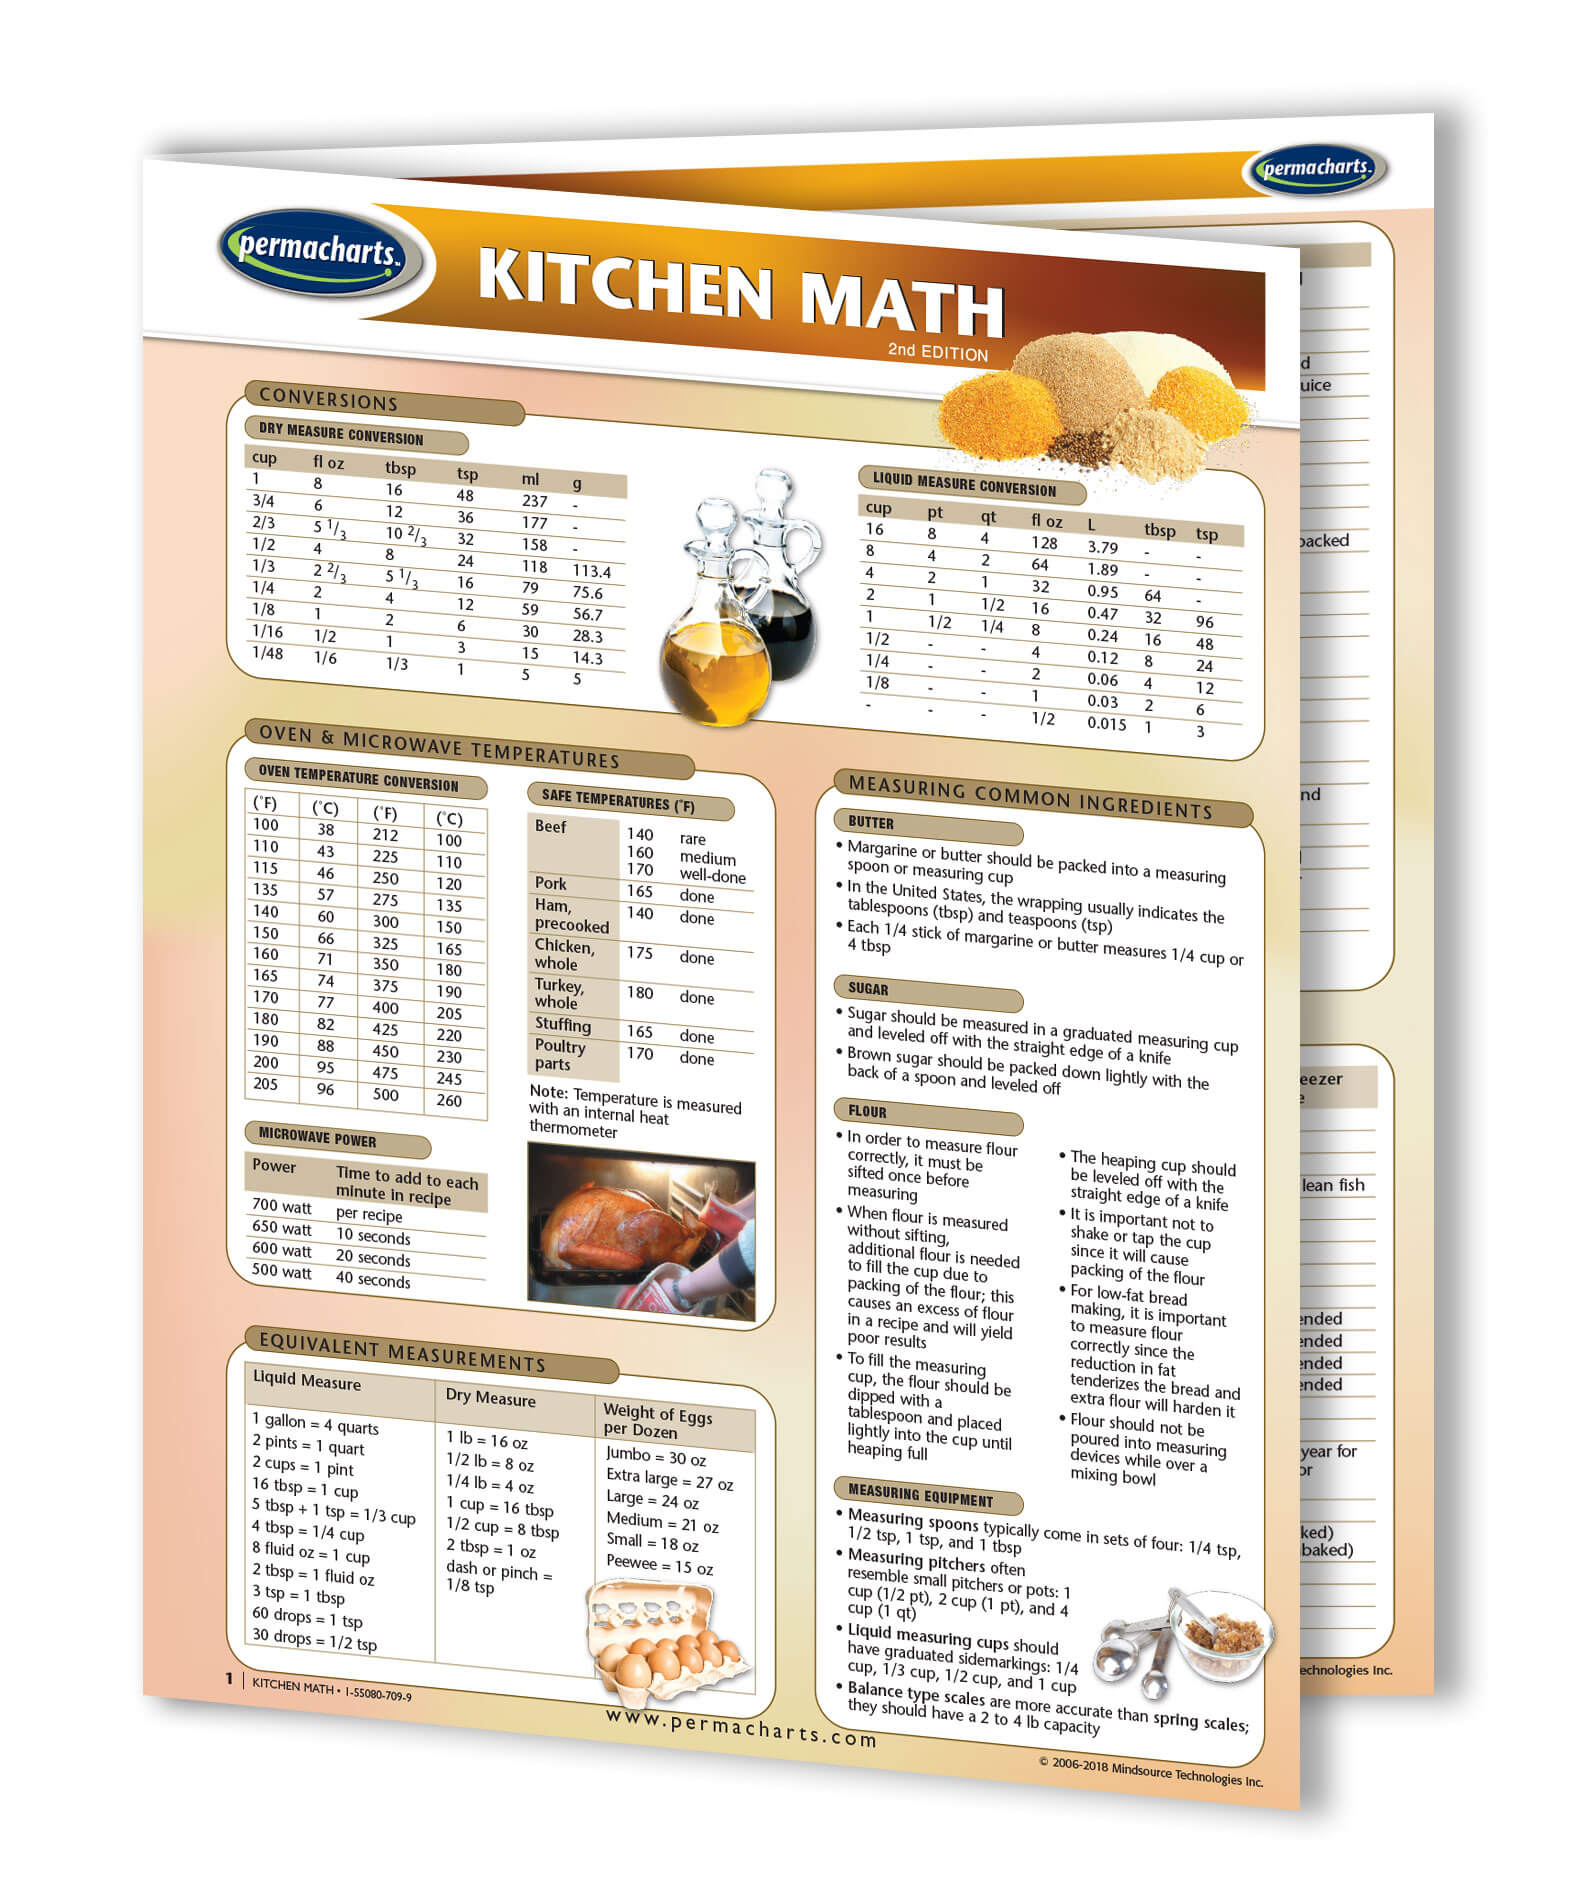 Kitchen Math A709 3D FRONT Nov17 11 ?v=1528224483